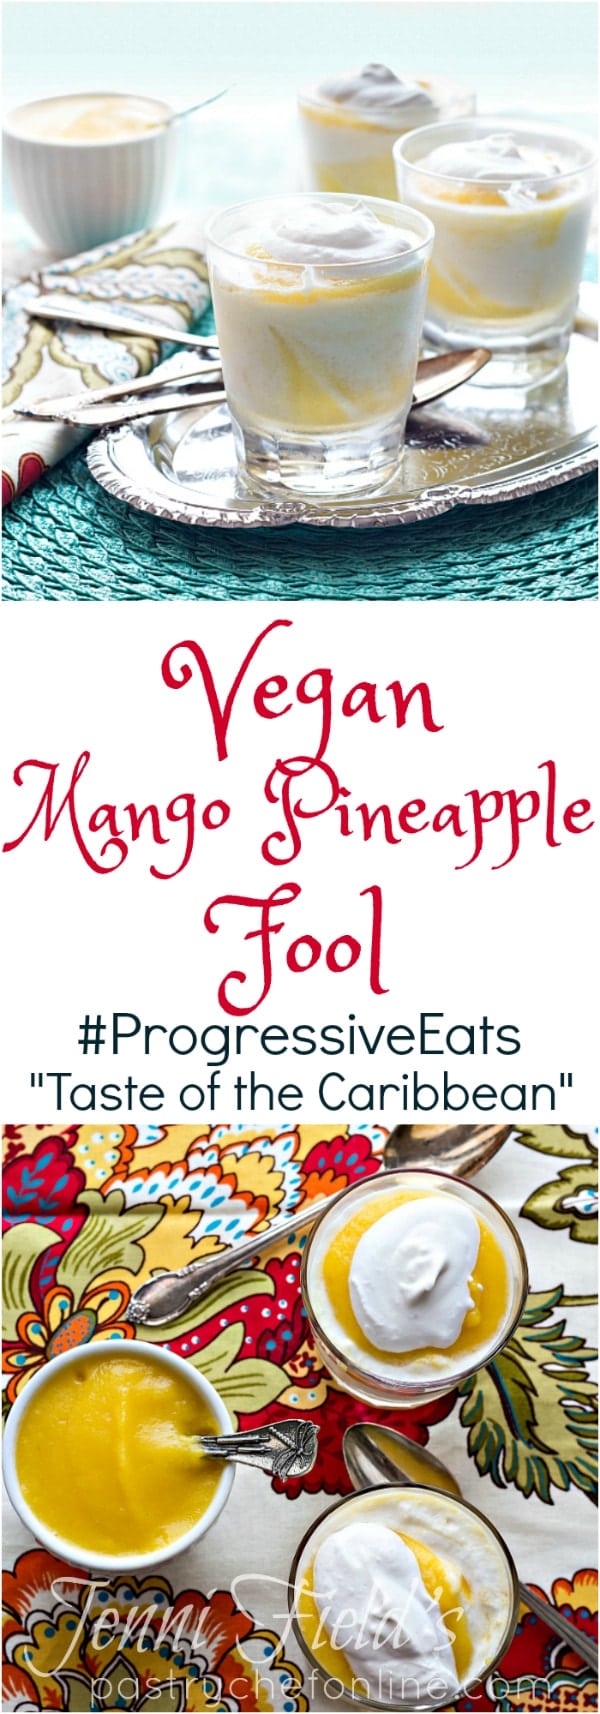 3 servings of mango pineapple fool on a silver platter and text reading: "Vegan Mango Pineapple Fool #progressiveEats "Taste of the Caribbean". "